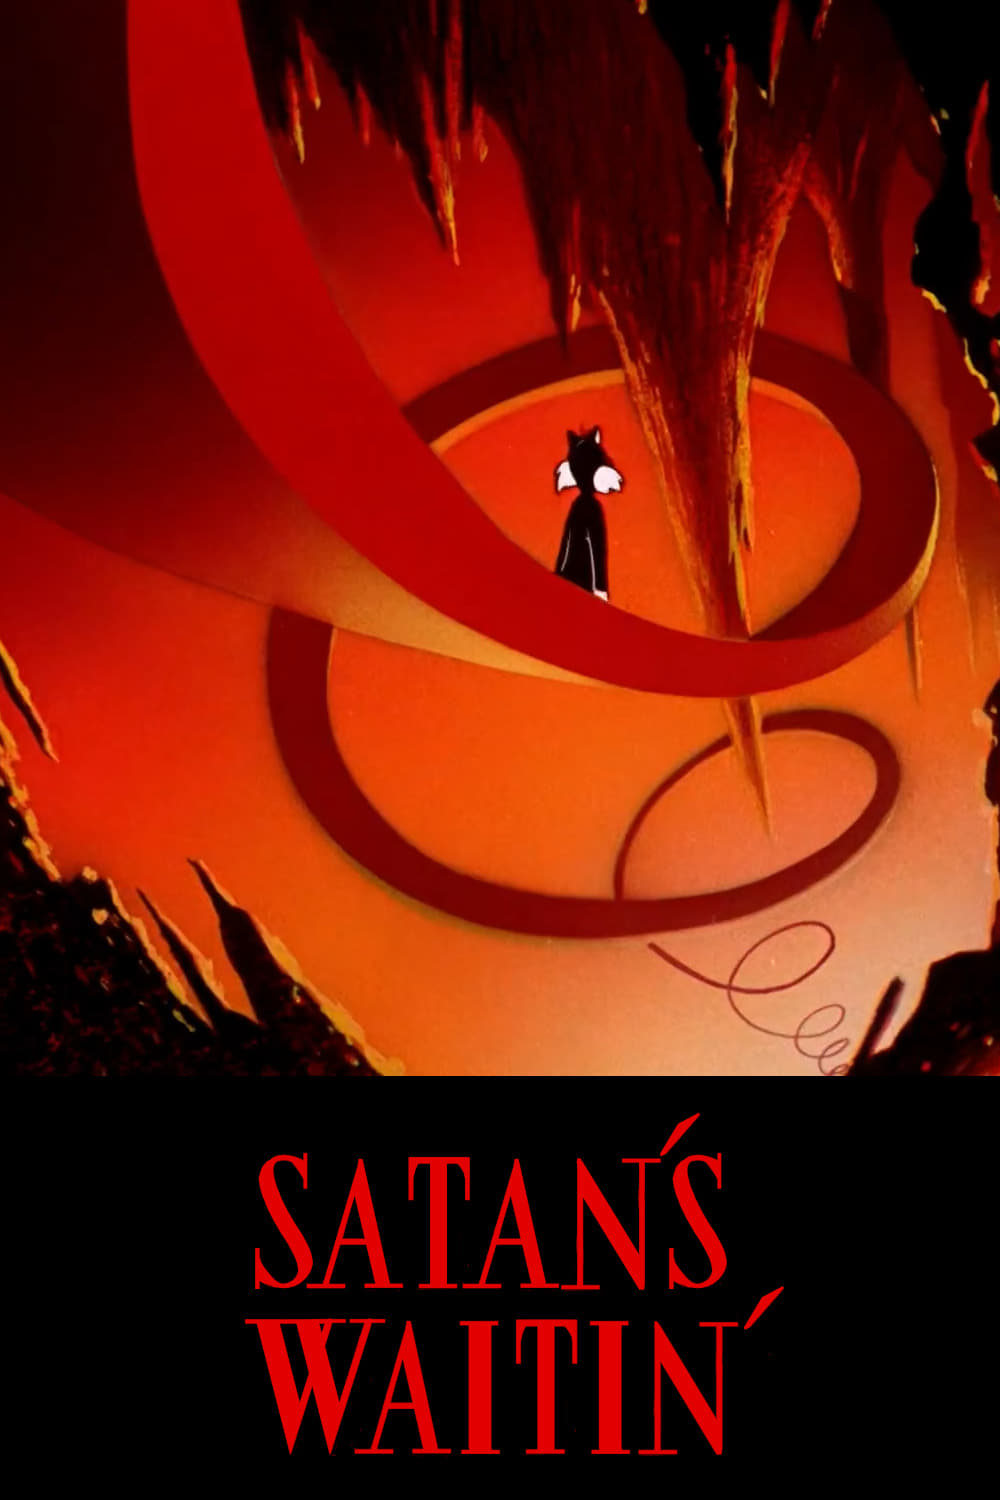 Satanás está esperando